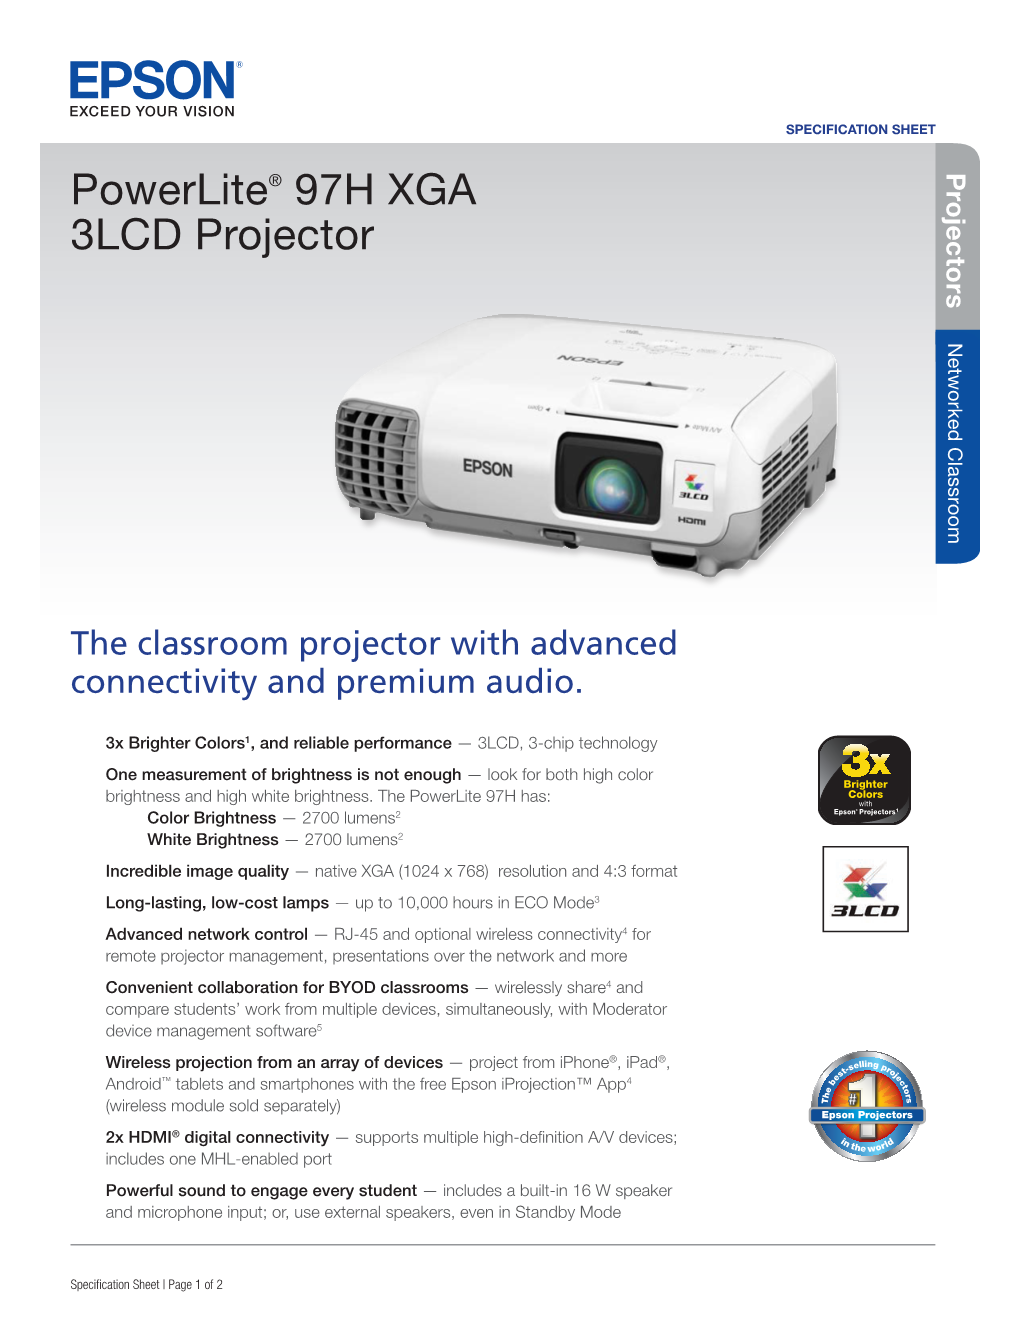 Powerlite® 97H XGA 3LCD Projector Projecto